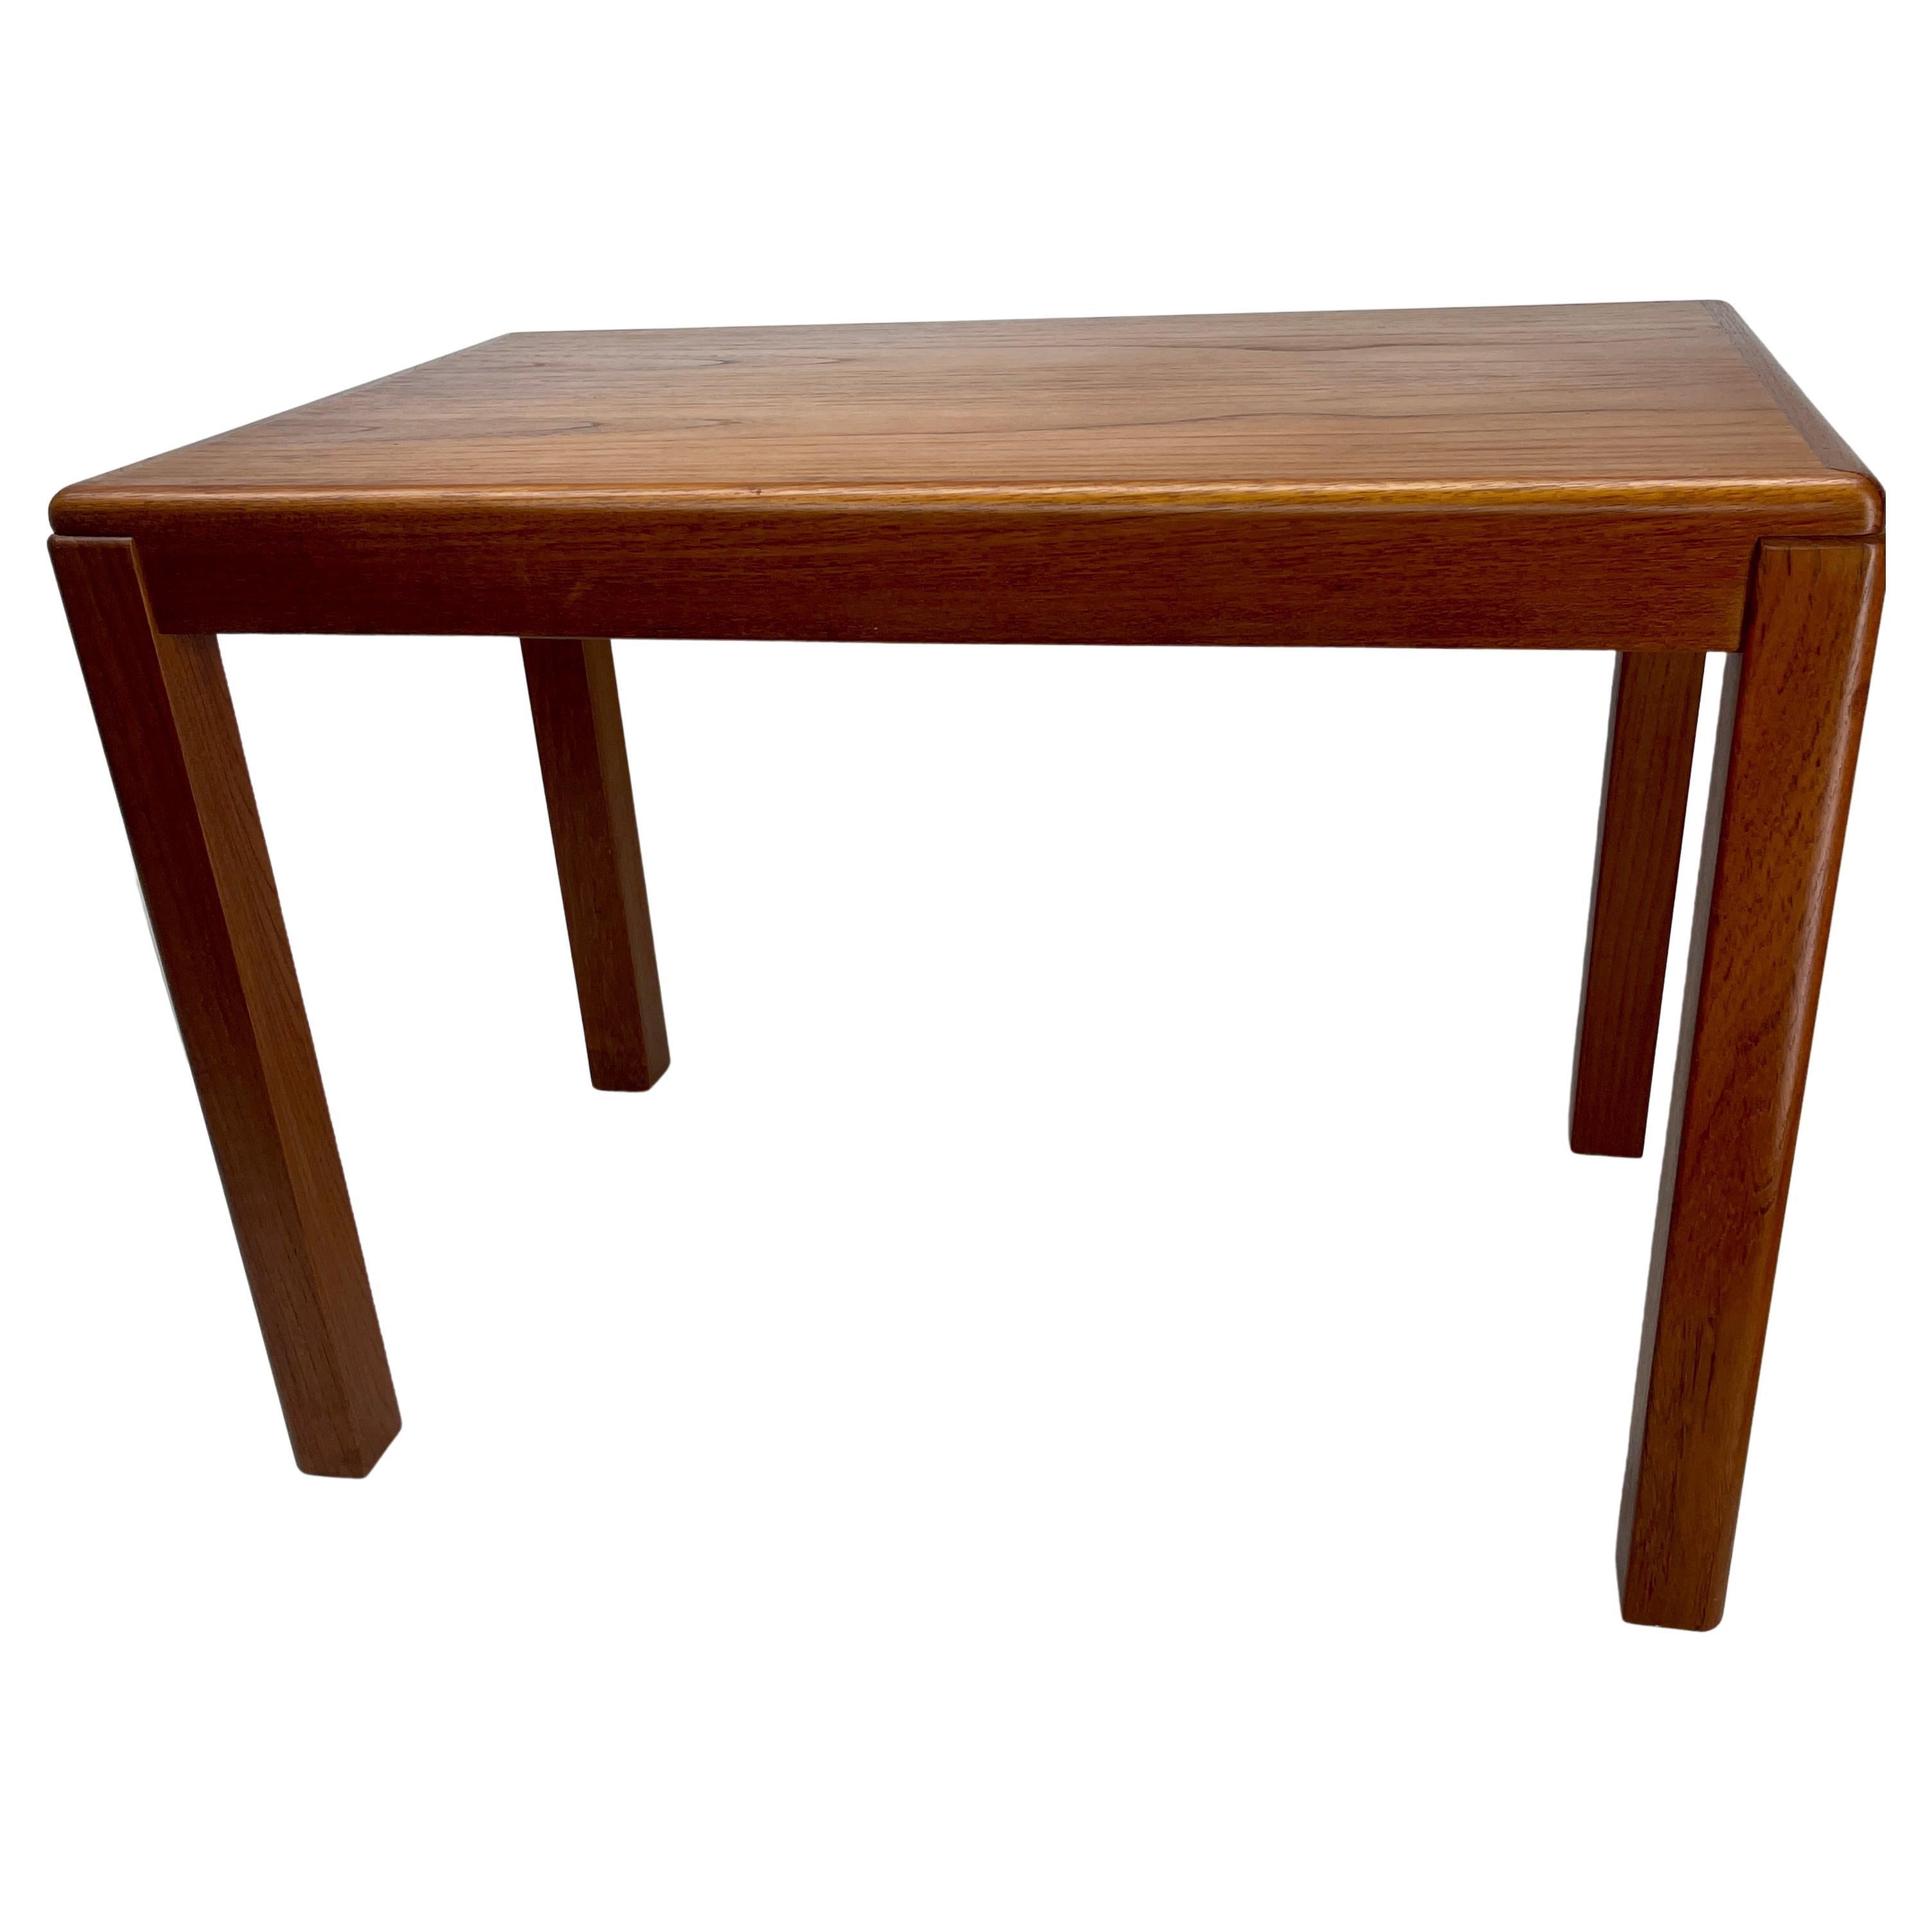 Scandinavian Modern rectangular teak wood coffee table. Manufactured by 